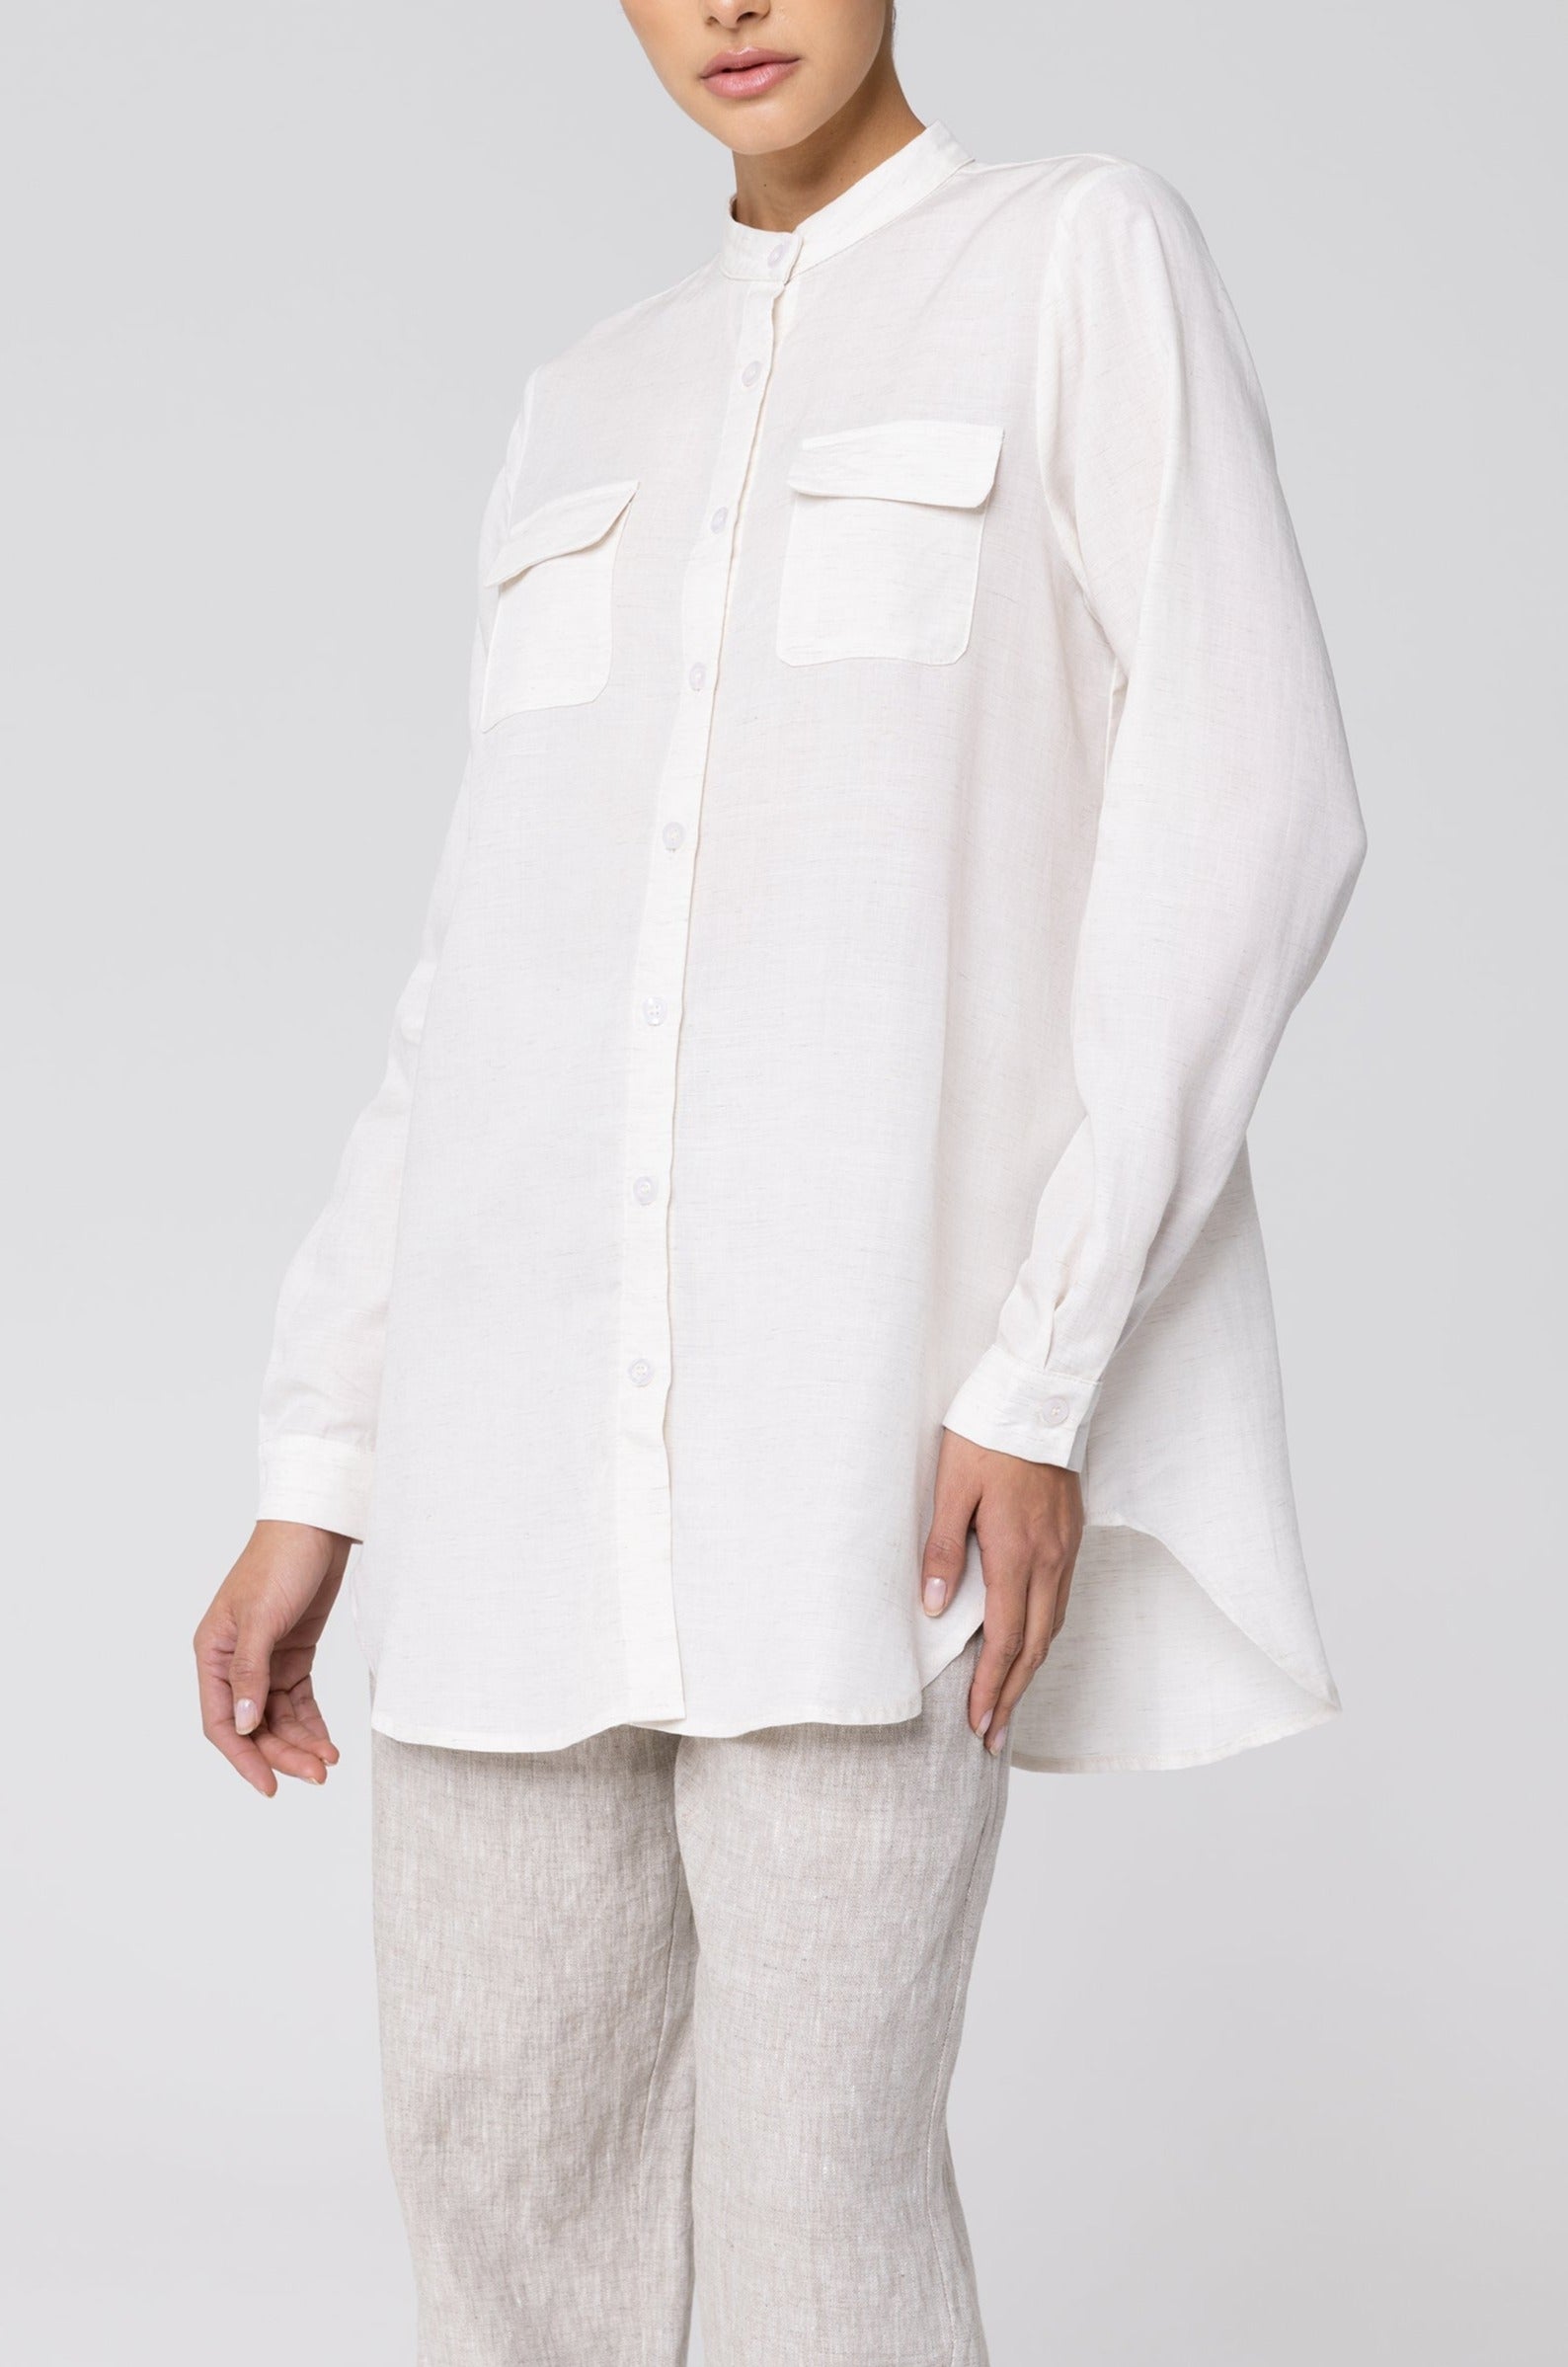 Lamia Button Down Top - White Veiled Collection 